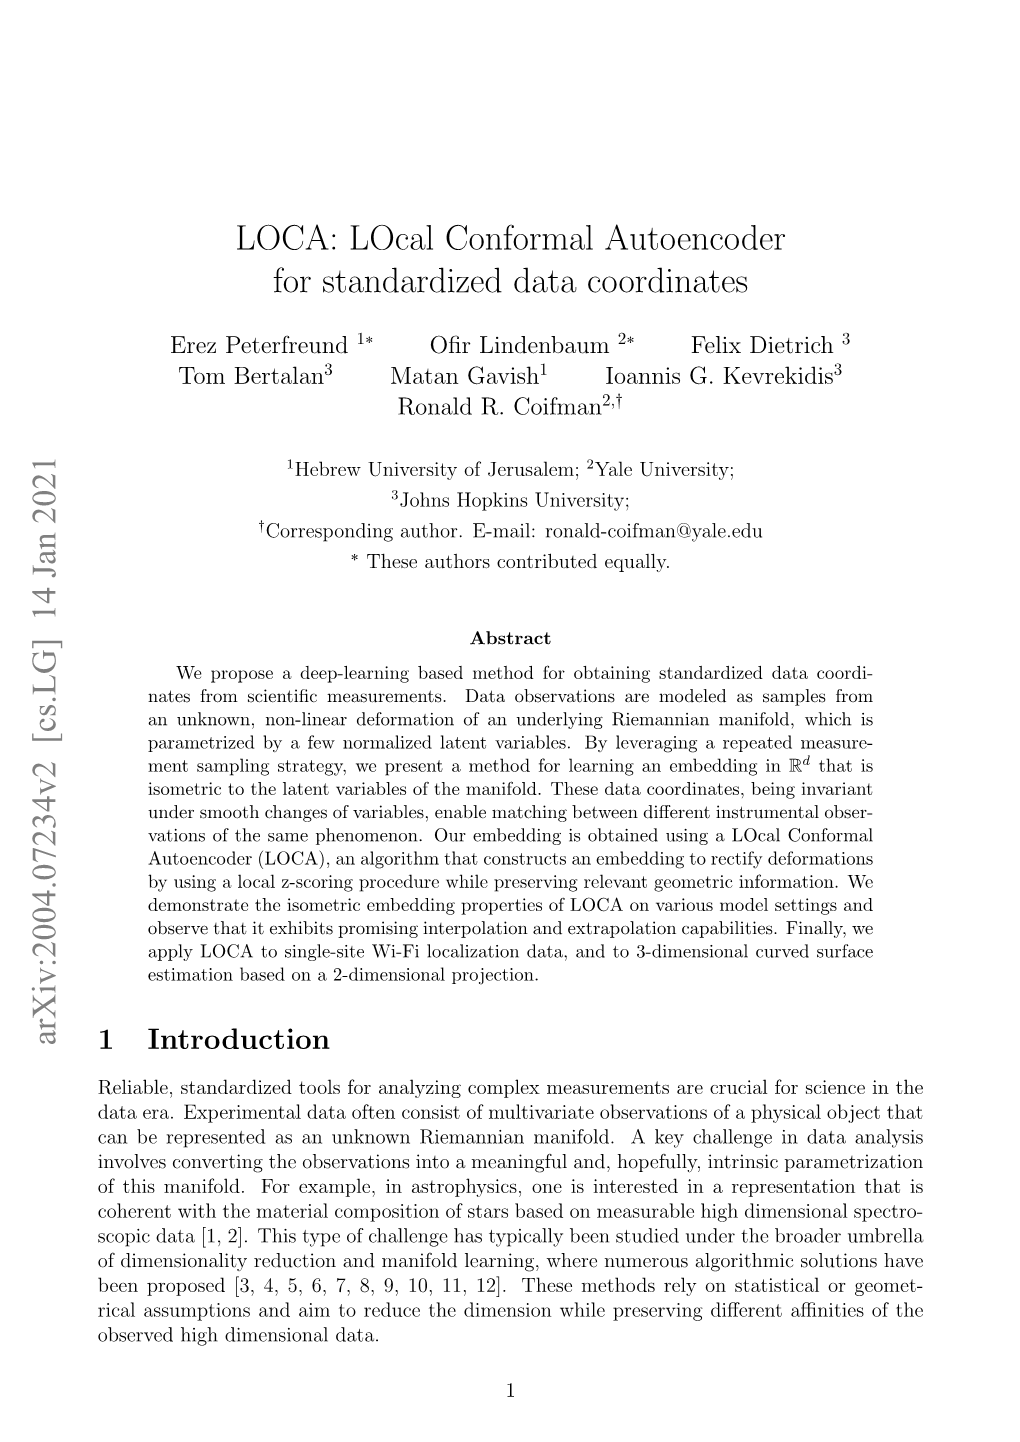 LOCA: Local Conformal Autoencoder for Standardized Data Coordinates